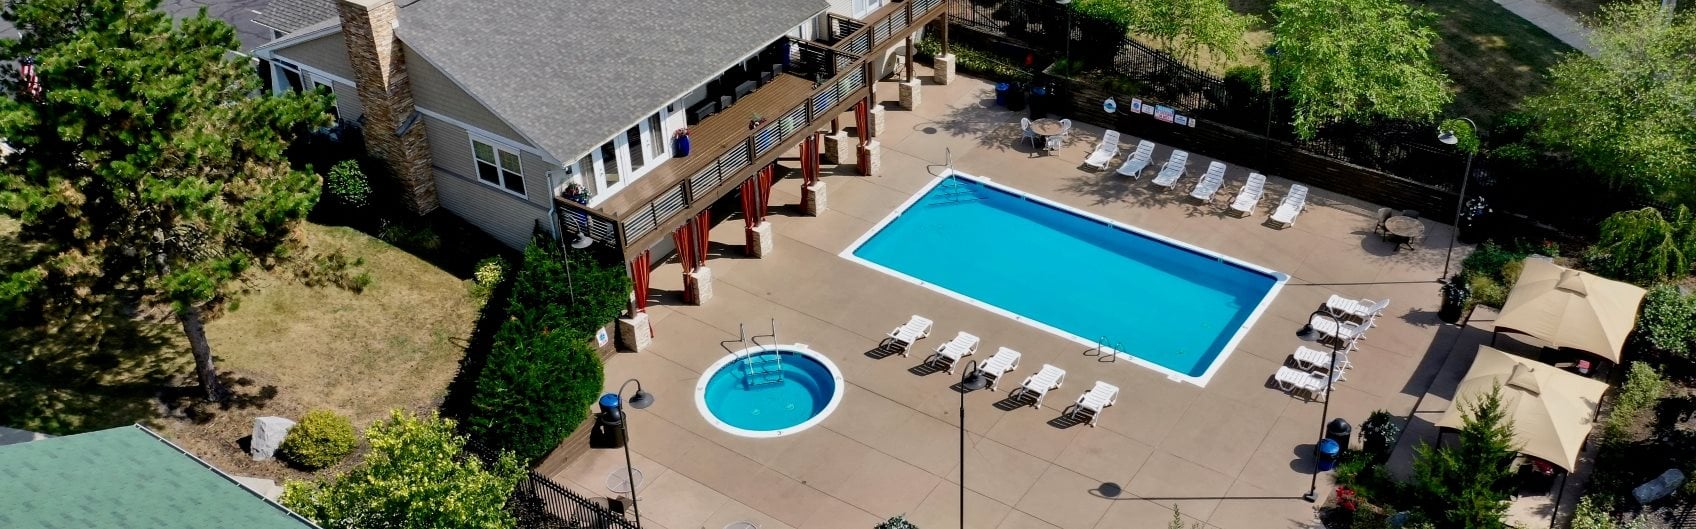 Beautiful Pool at The Bronco Club Apartments in Kalamazoo, MI